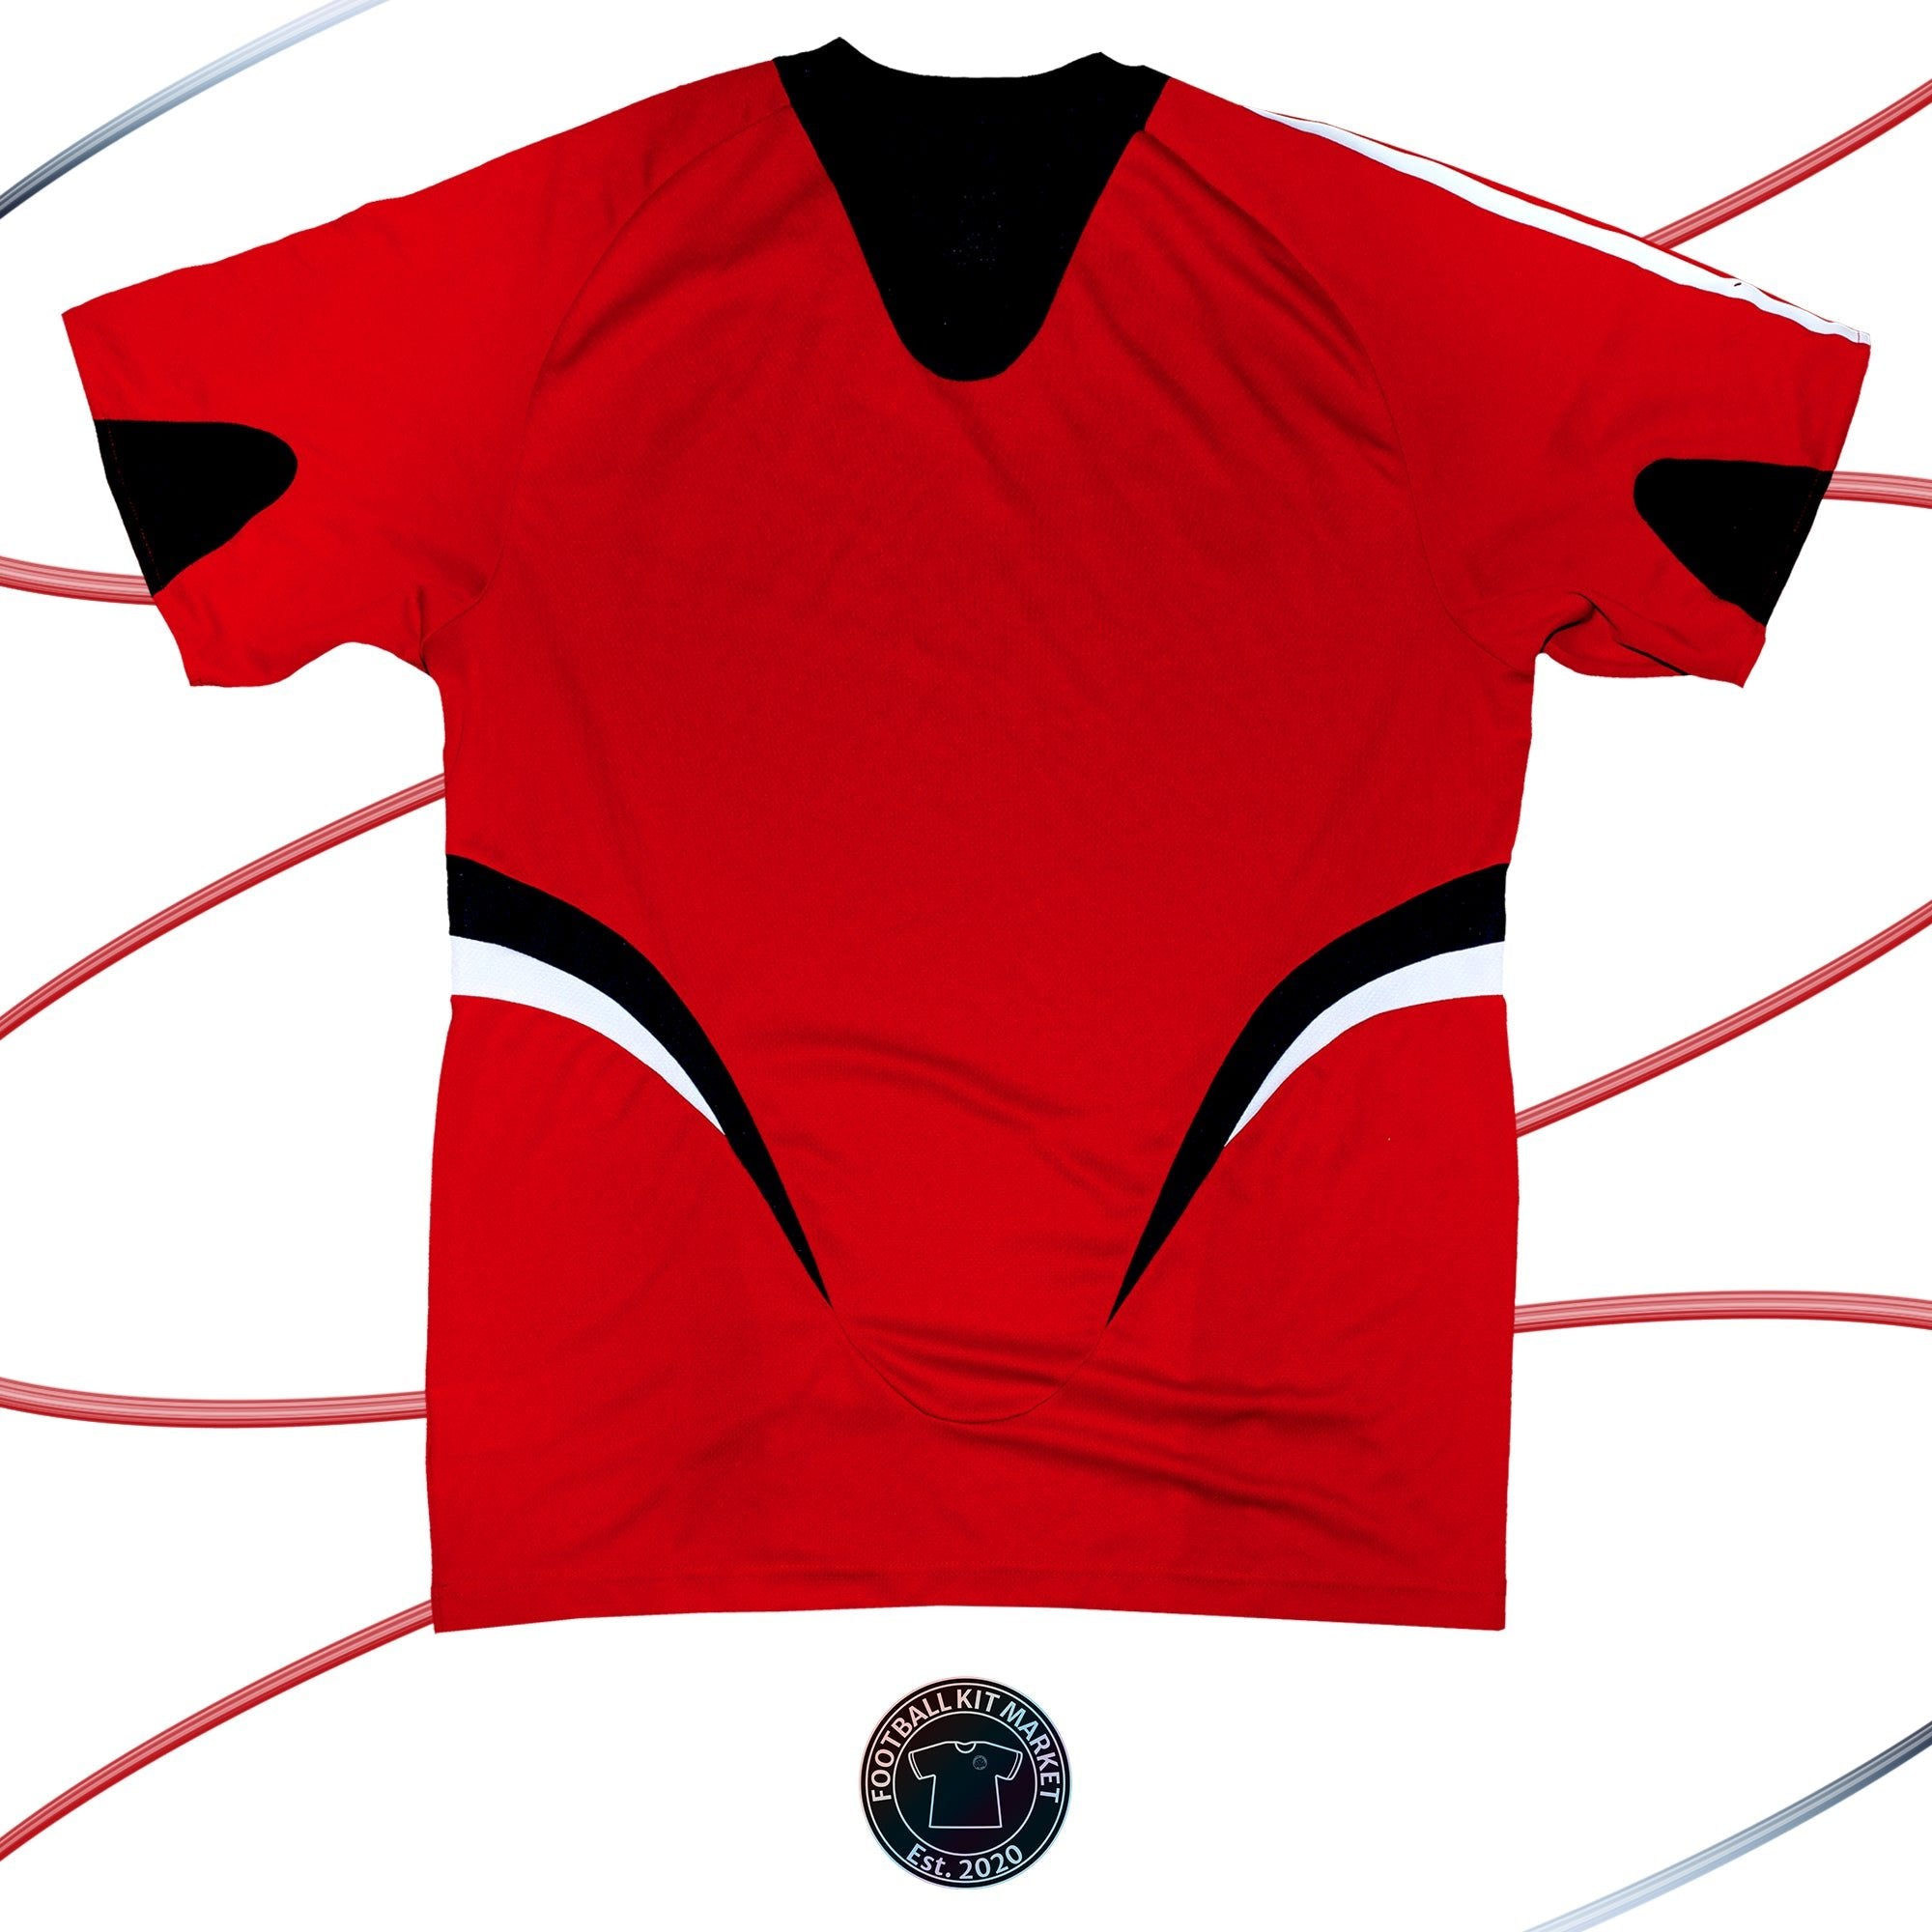 Genuine BAYERN MUNICH Training Shirt (2008-2009) - ADIDAS (L) - Product Image from Football Kit Market